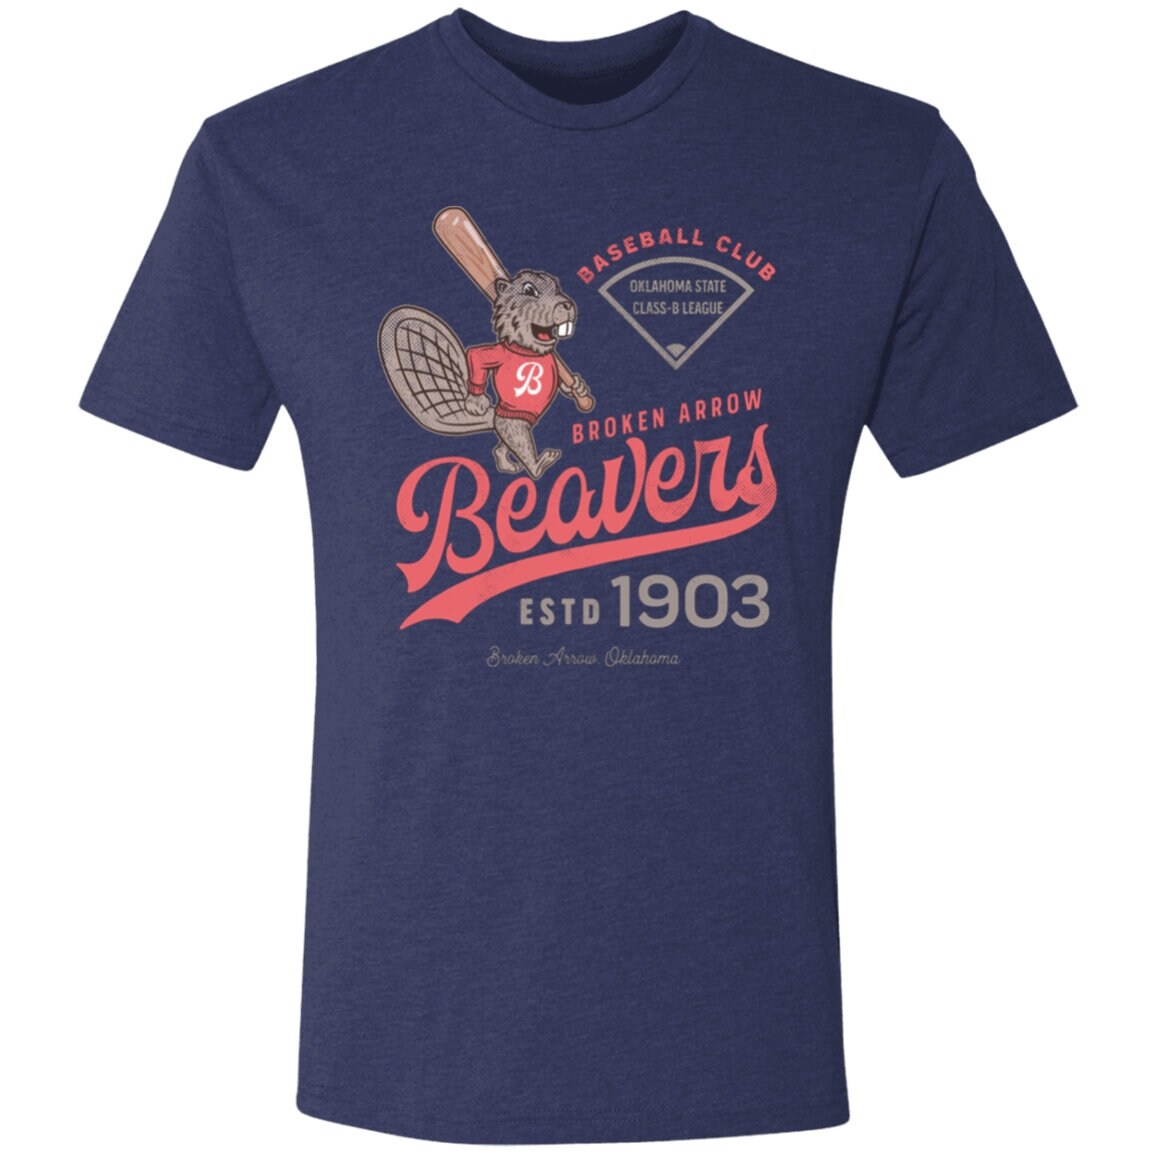  Boston Black Cats Baseball Retro Minor League Baseball Team  T-Shirt : Clothing, Shoes & Jewelry